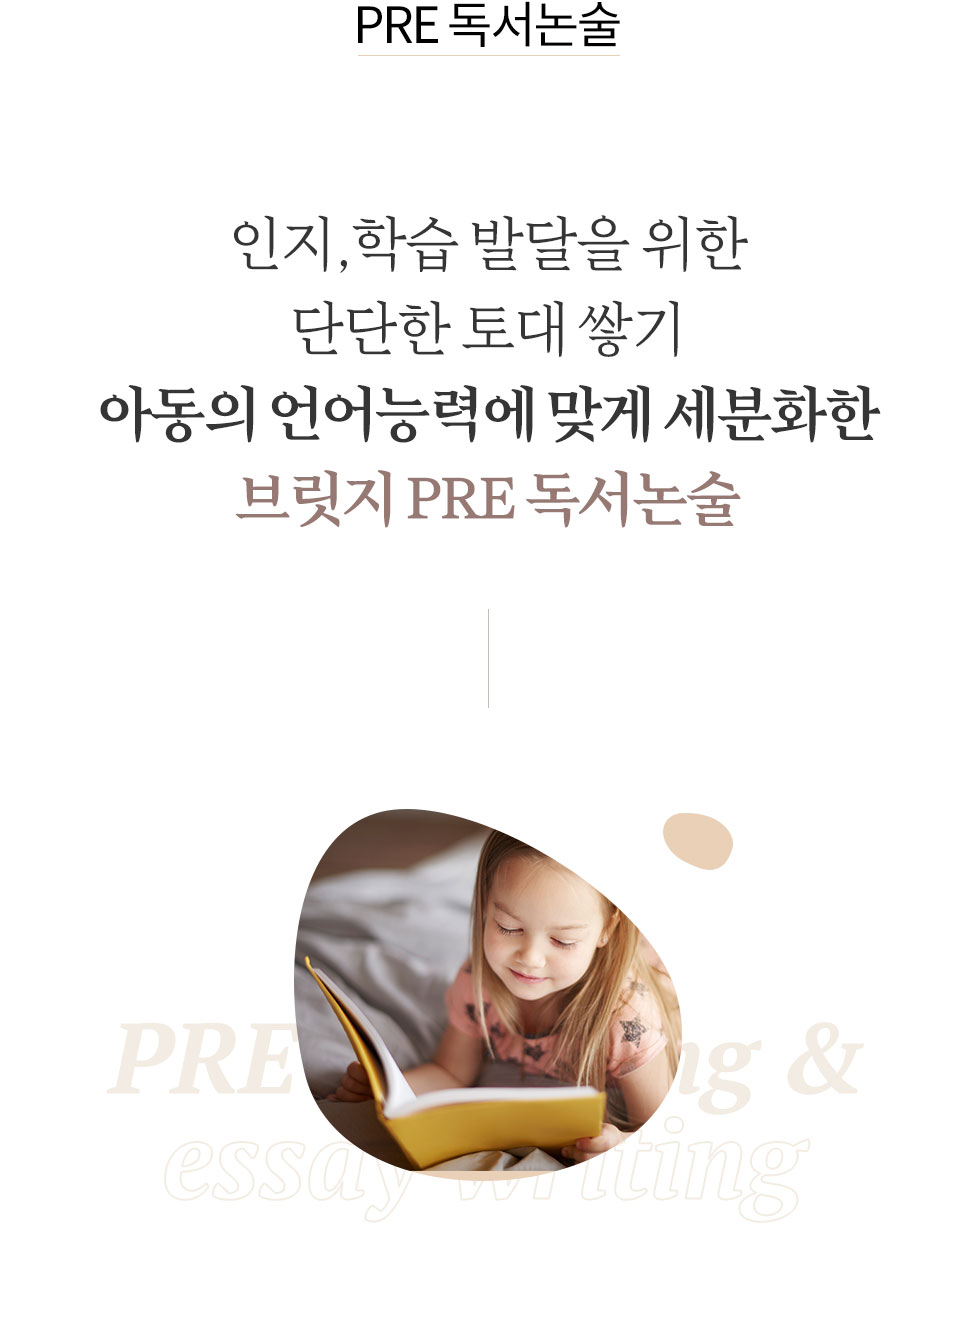 PRE 독서논술. 인지,학습 발달을 위한 단단한 토대 쌓기 아동의 언어능력에 맞게 세분화한 브릿지 PRE 독서논술